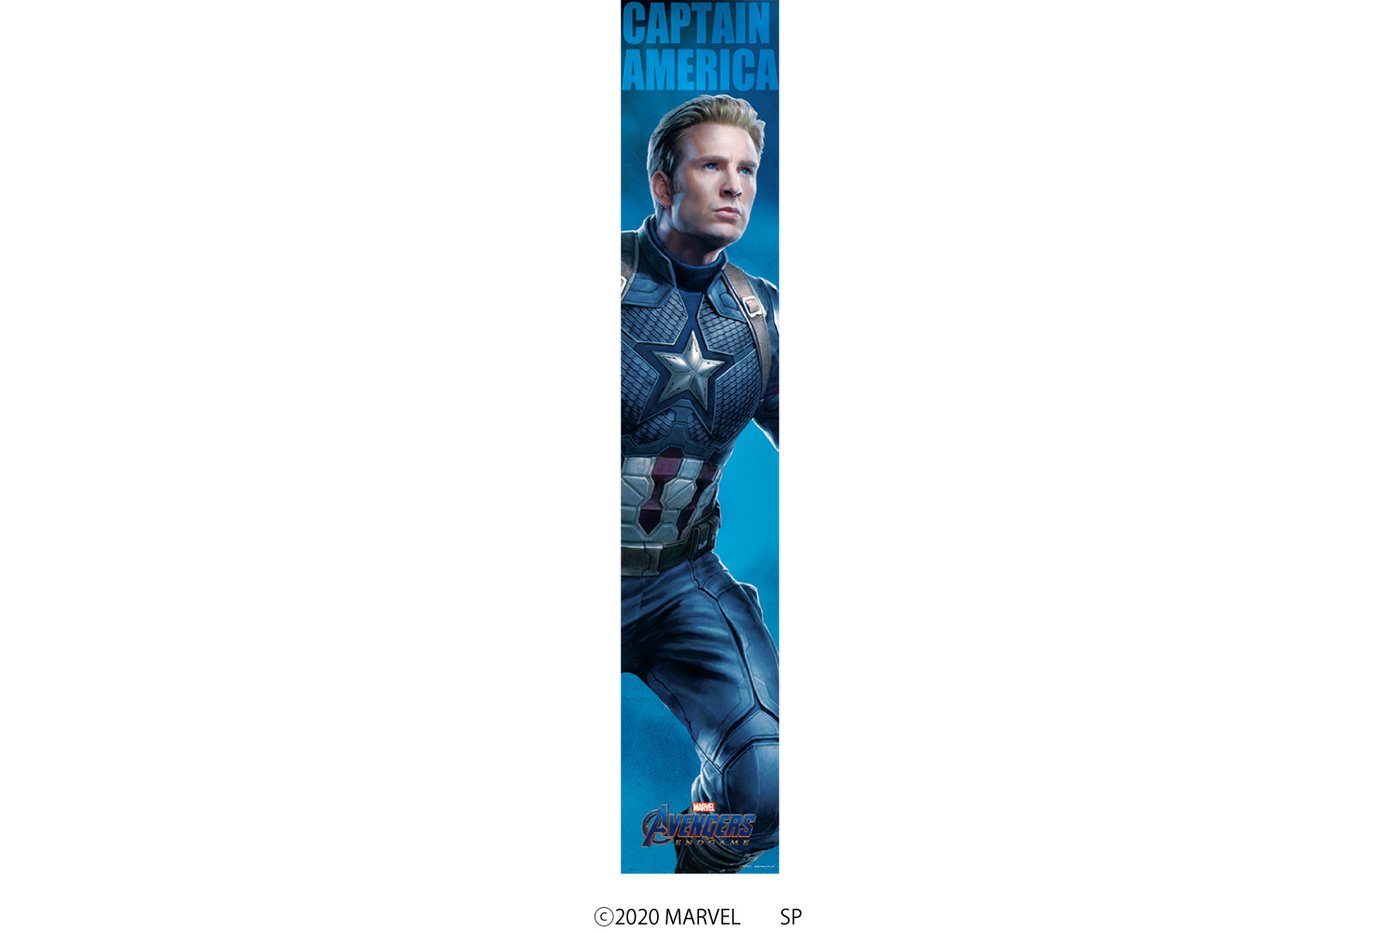 Marvel マーベル Avengers Endgame 壁紙素材ウォールステッカー キャプテン アメリカ 1シートタイプ キャプテン アメリカ Wall Paper M008 1 プリテック Indorerwamo Com